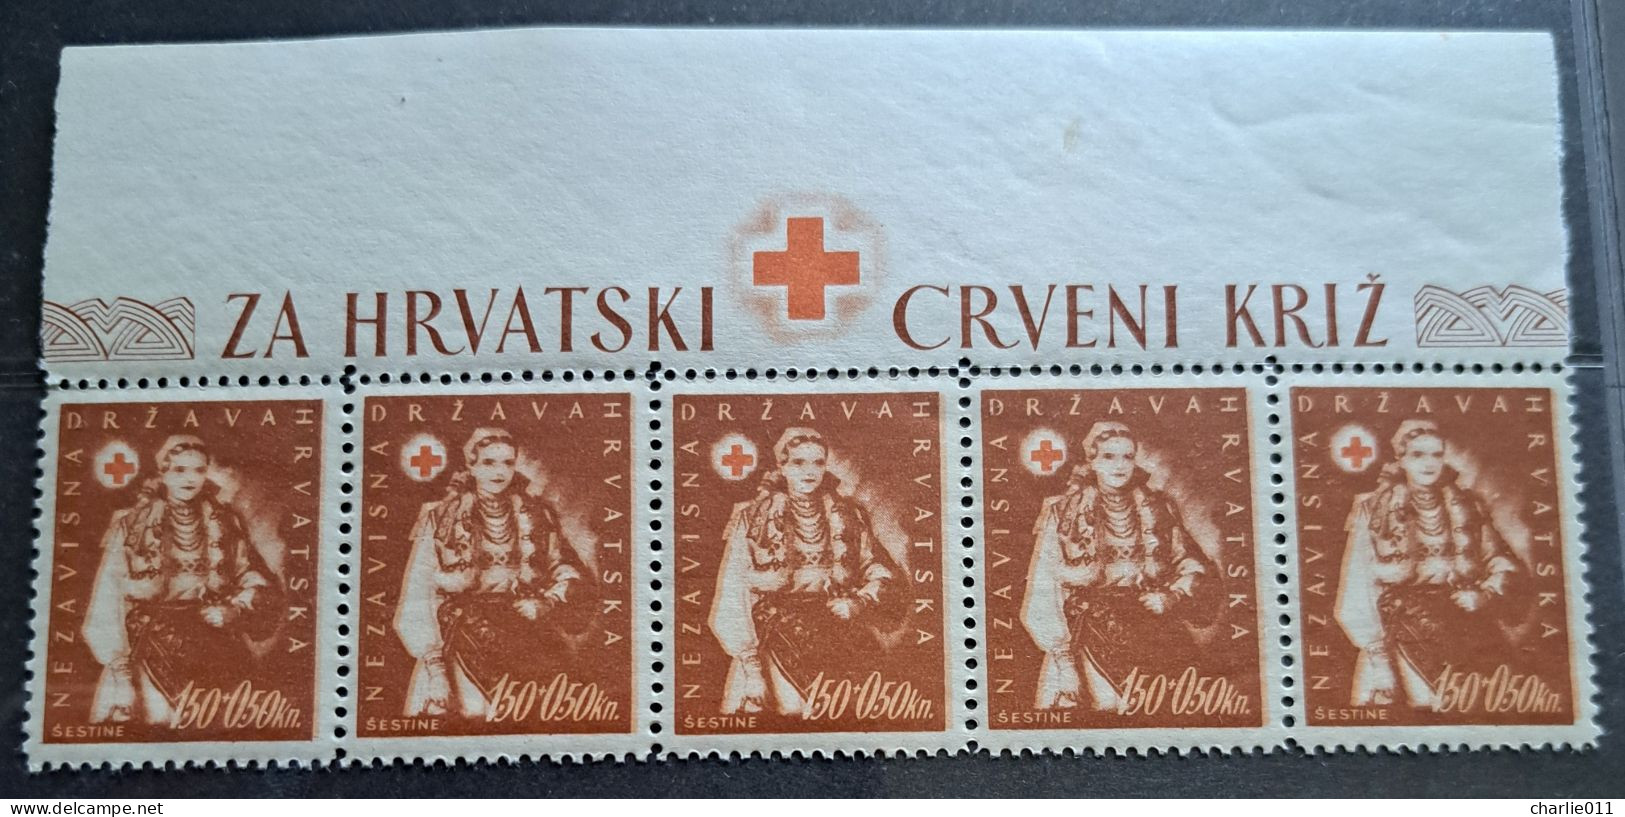 RED CROSS-1.50 + 0.50 K-NATIONAL COSTUMES-ŠESTINE-TOP OF THE SHEETLET-NDH-CROATIA-1942 - Kroatien